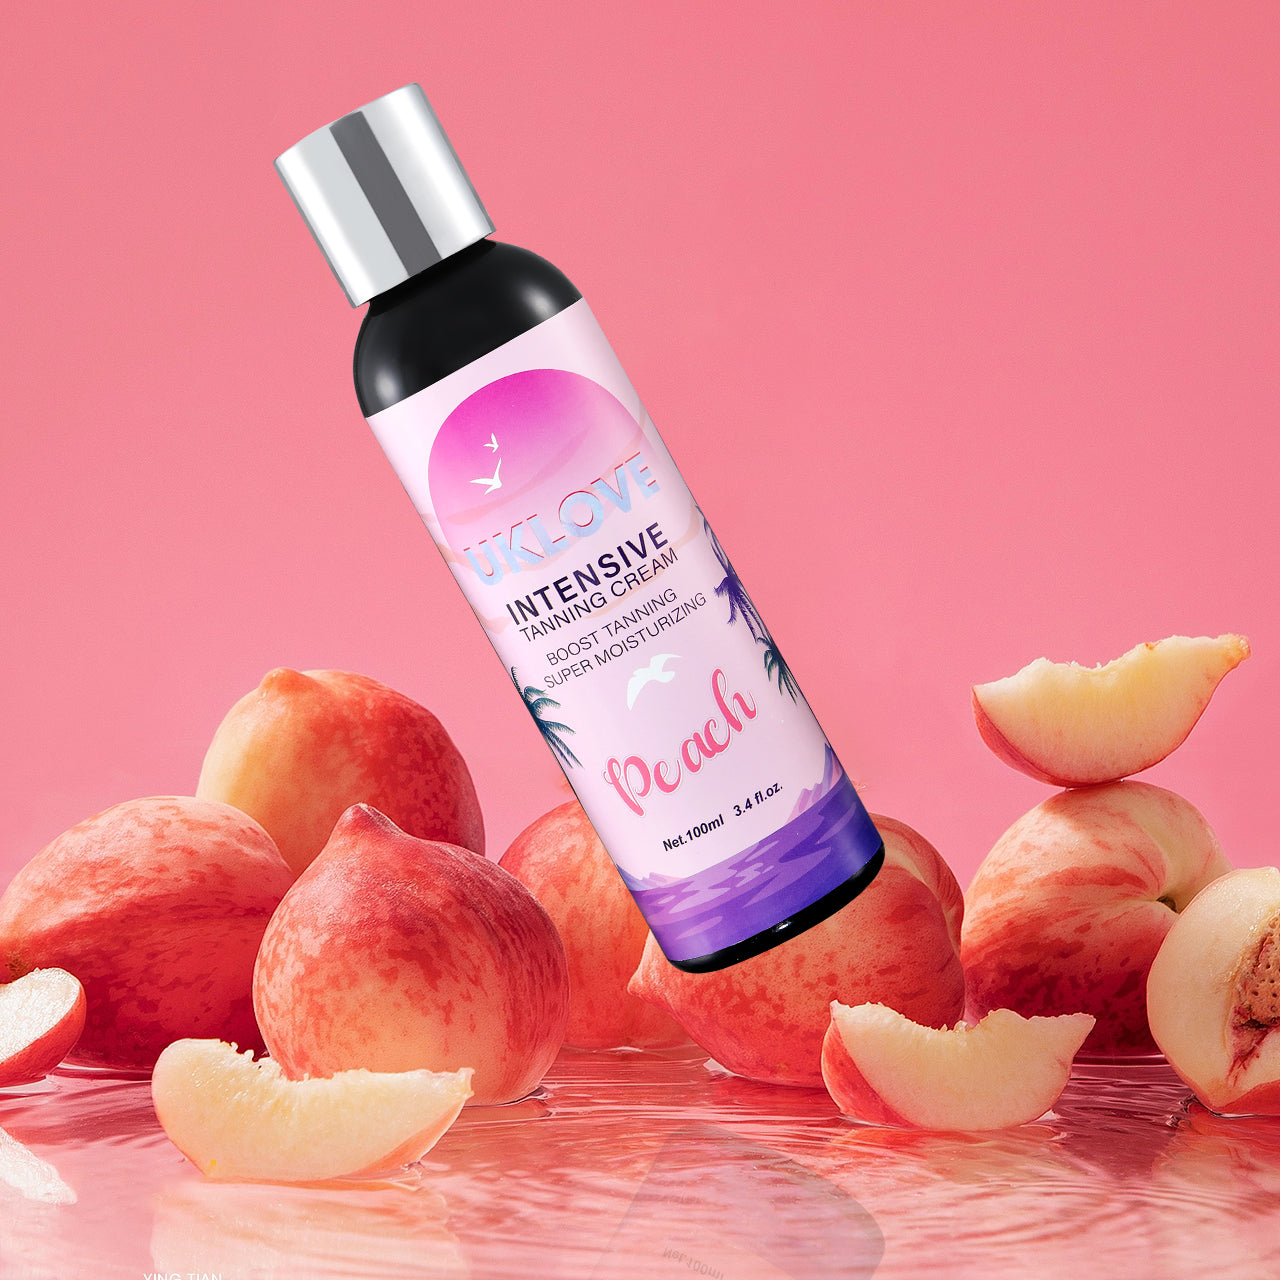 UKLOVE tanning cream peach fragrance intensive boost tanning